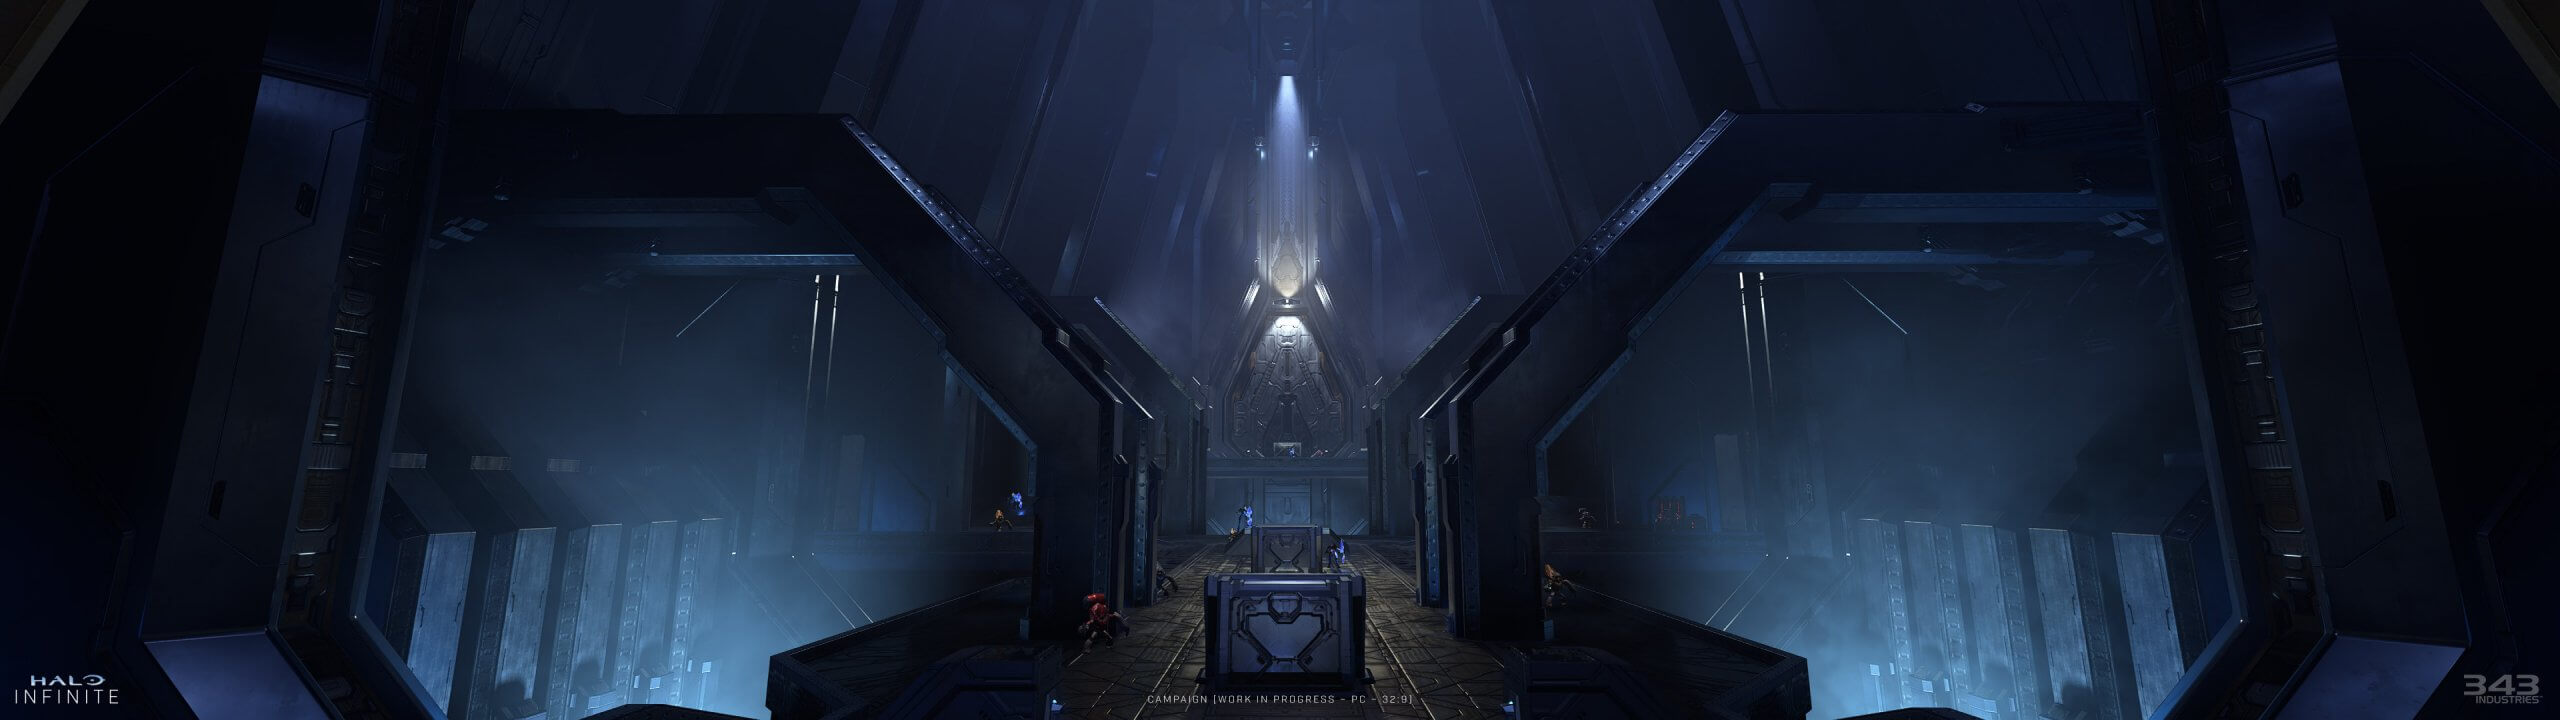 New Halo Infinite PC 32:9 super ultrawide screenshots